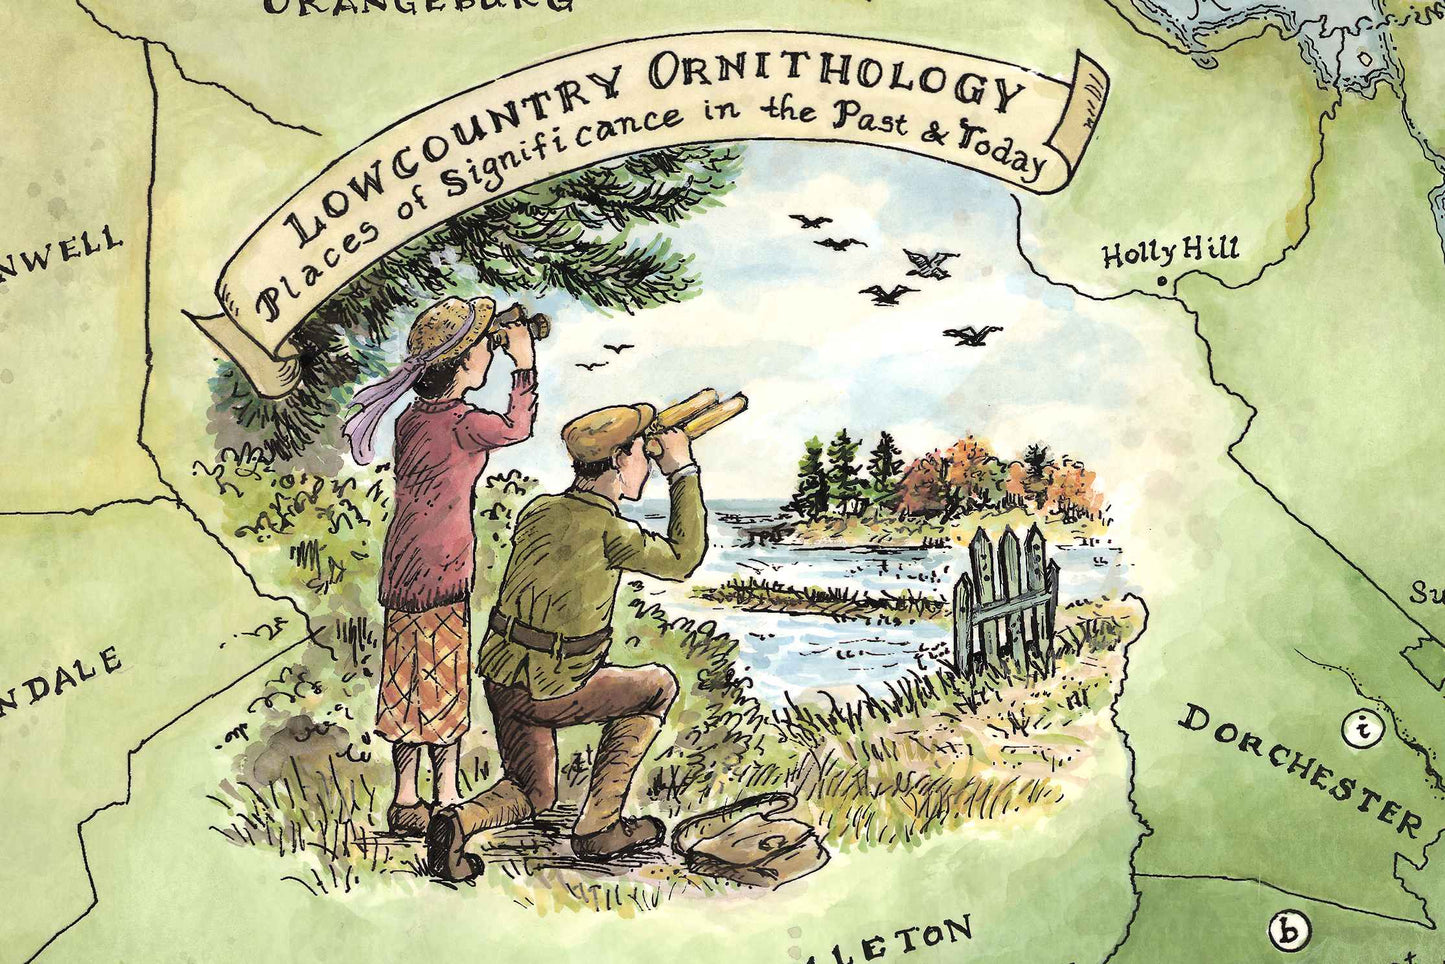 Lowcountry Ornithology